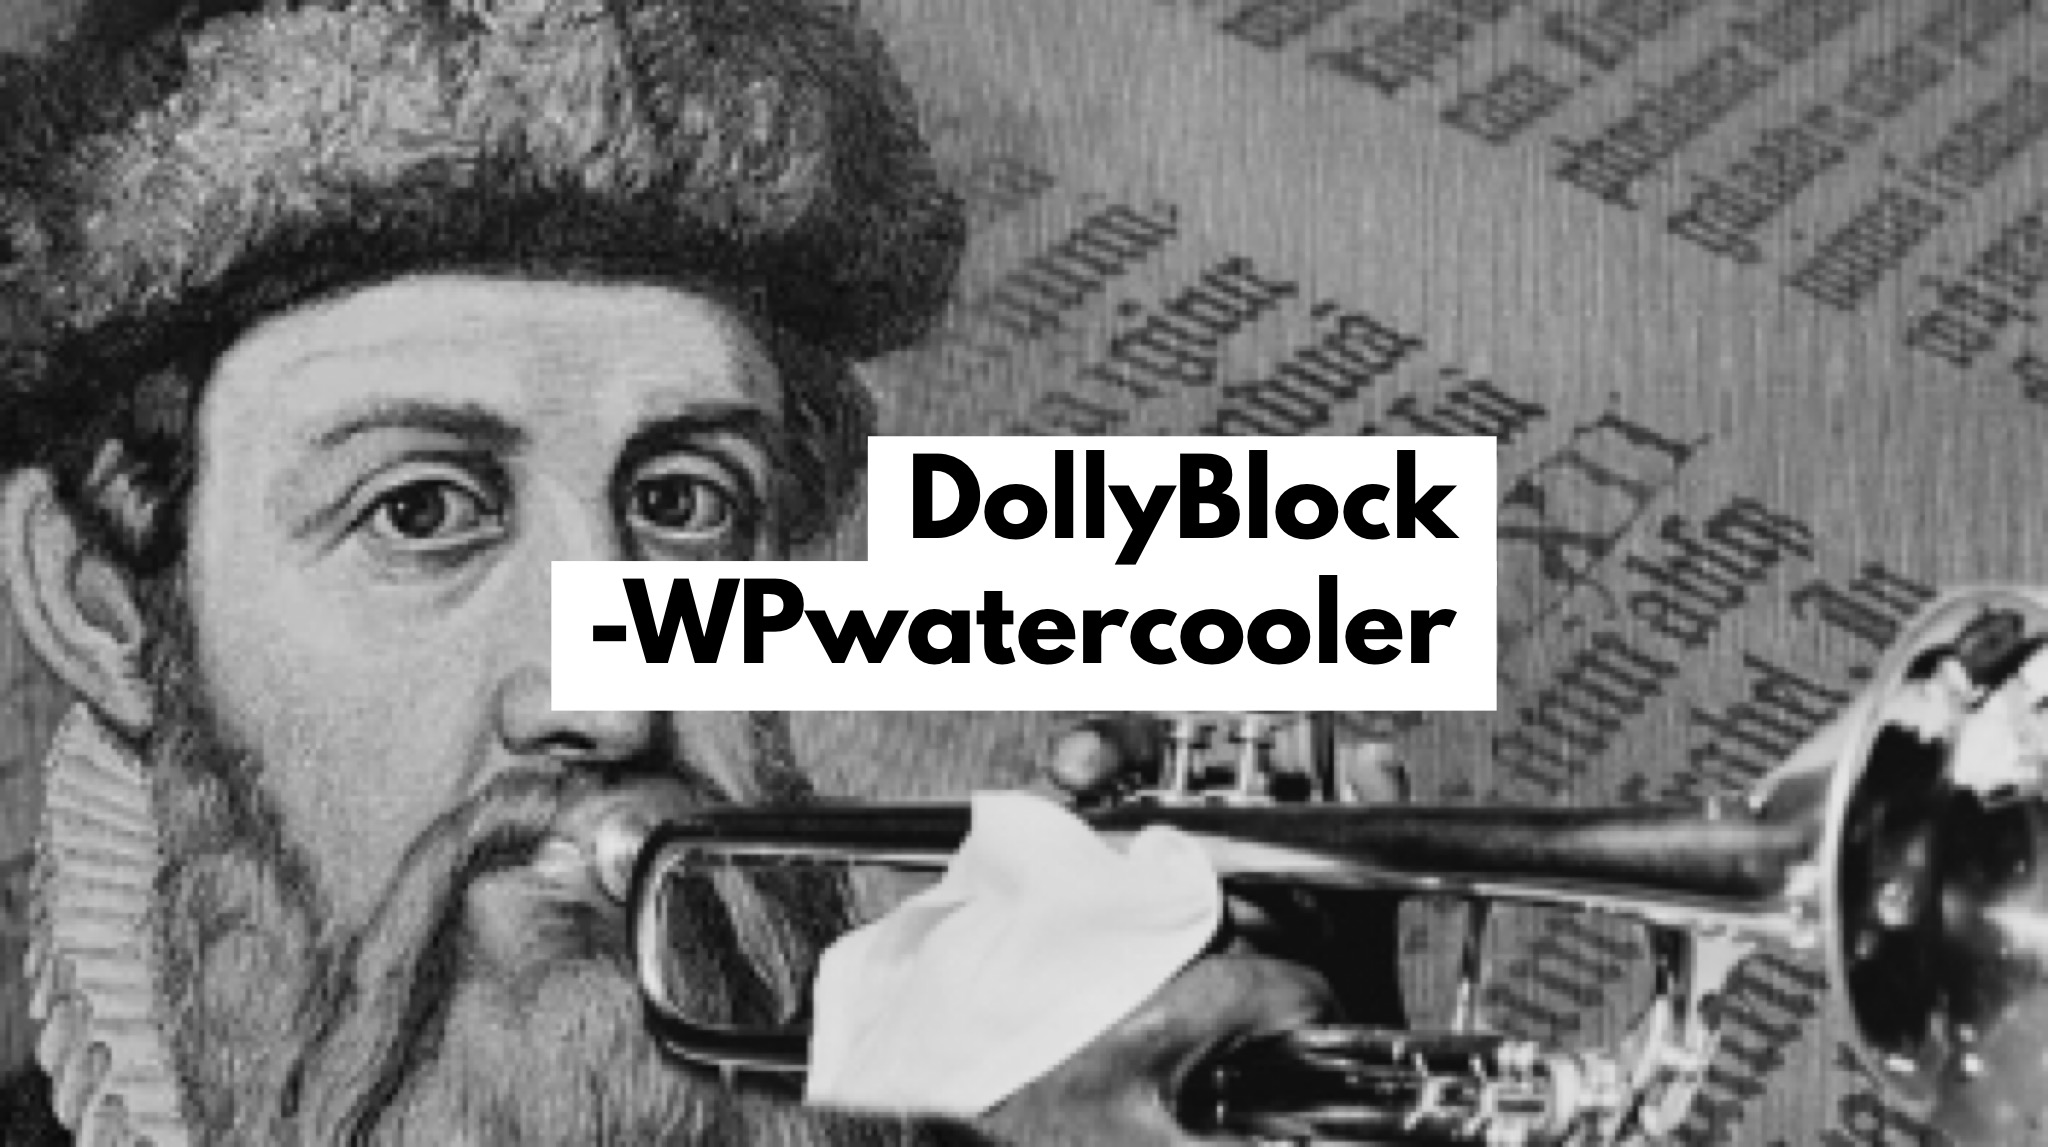 WPwatercooler EP297 - DollyBlock